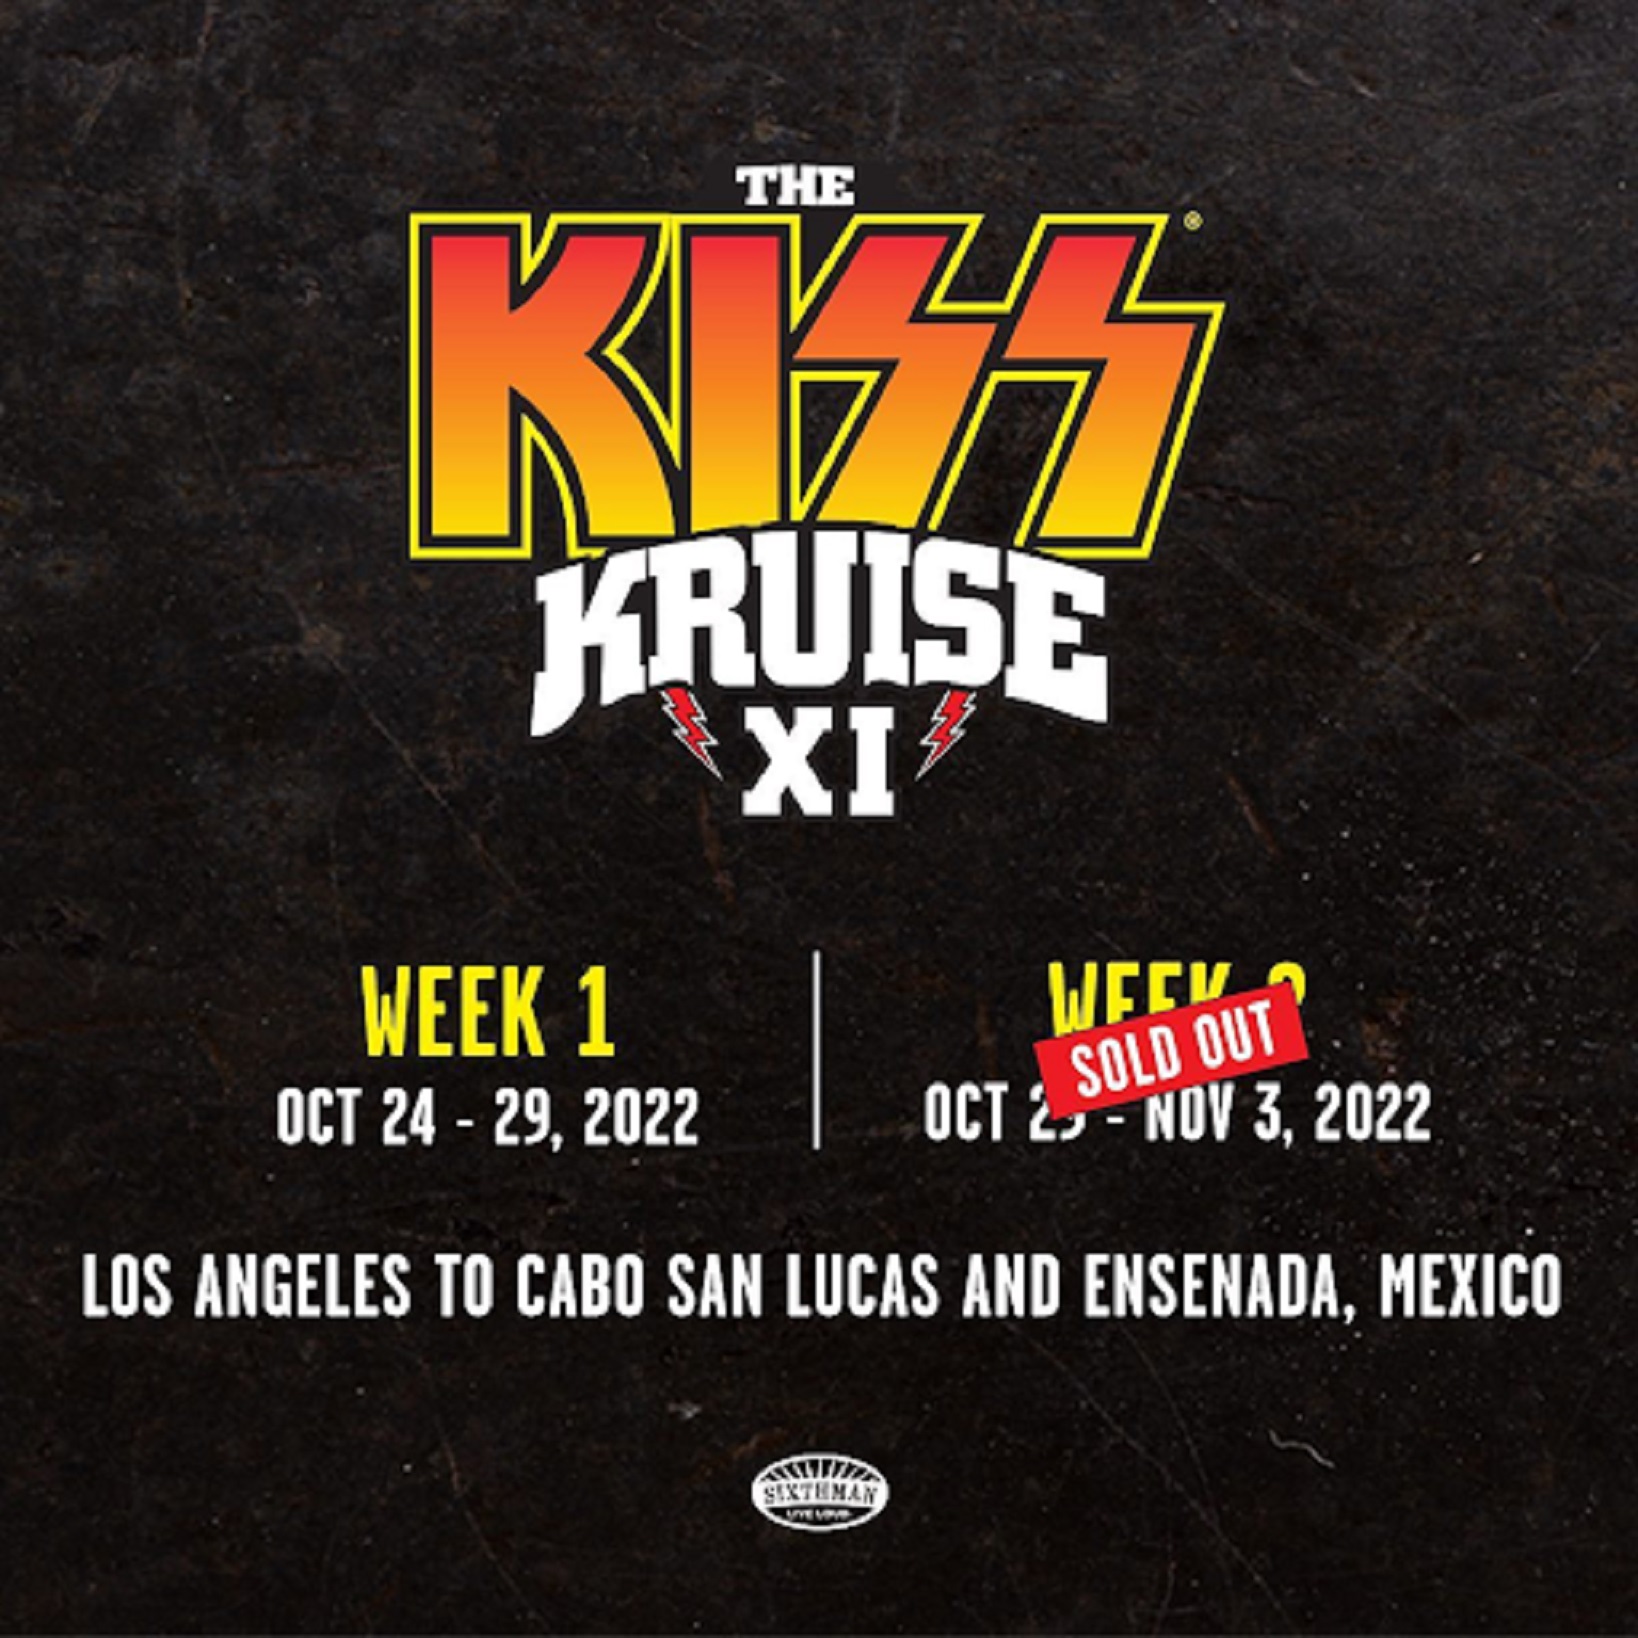 KISS and Sixthman unveil all-star Kiss Kruise XI lineups